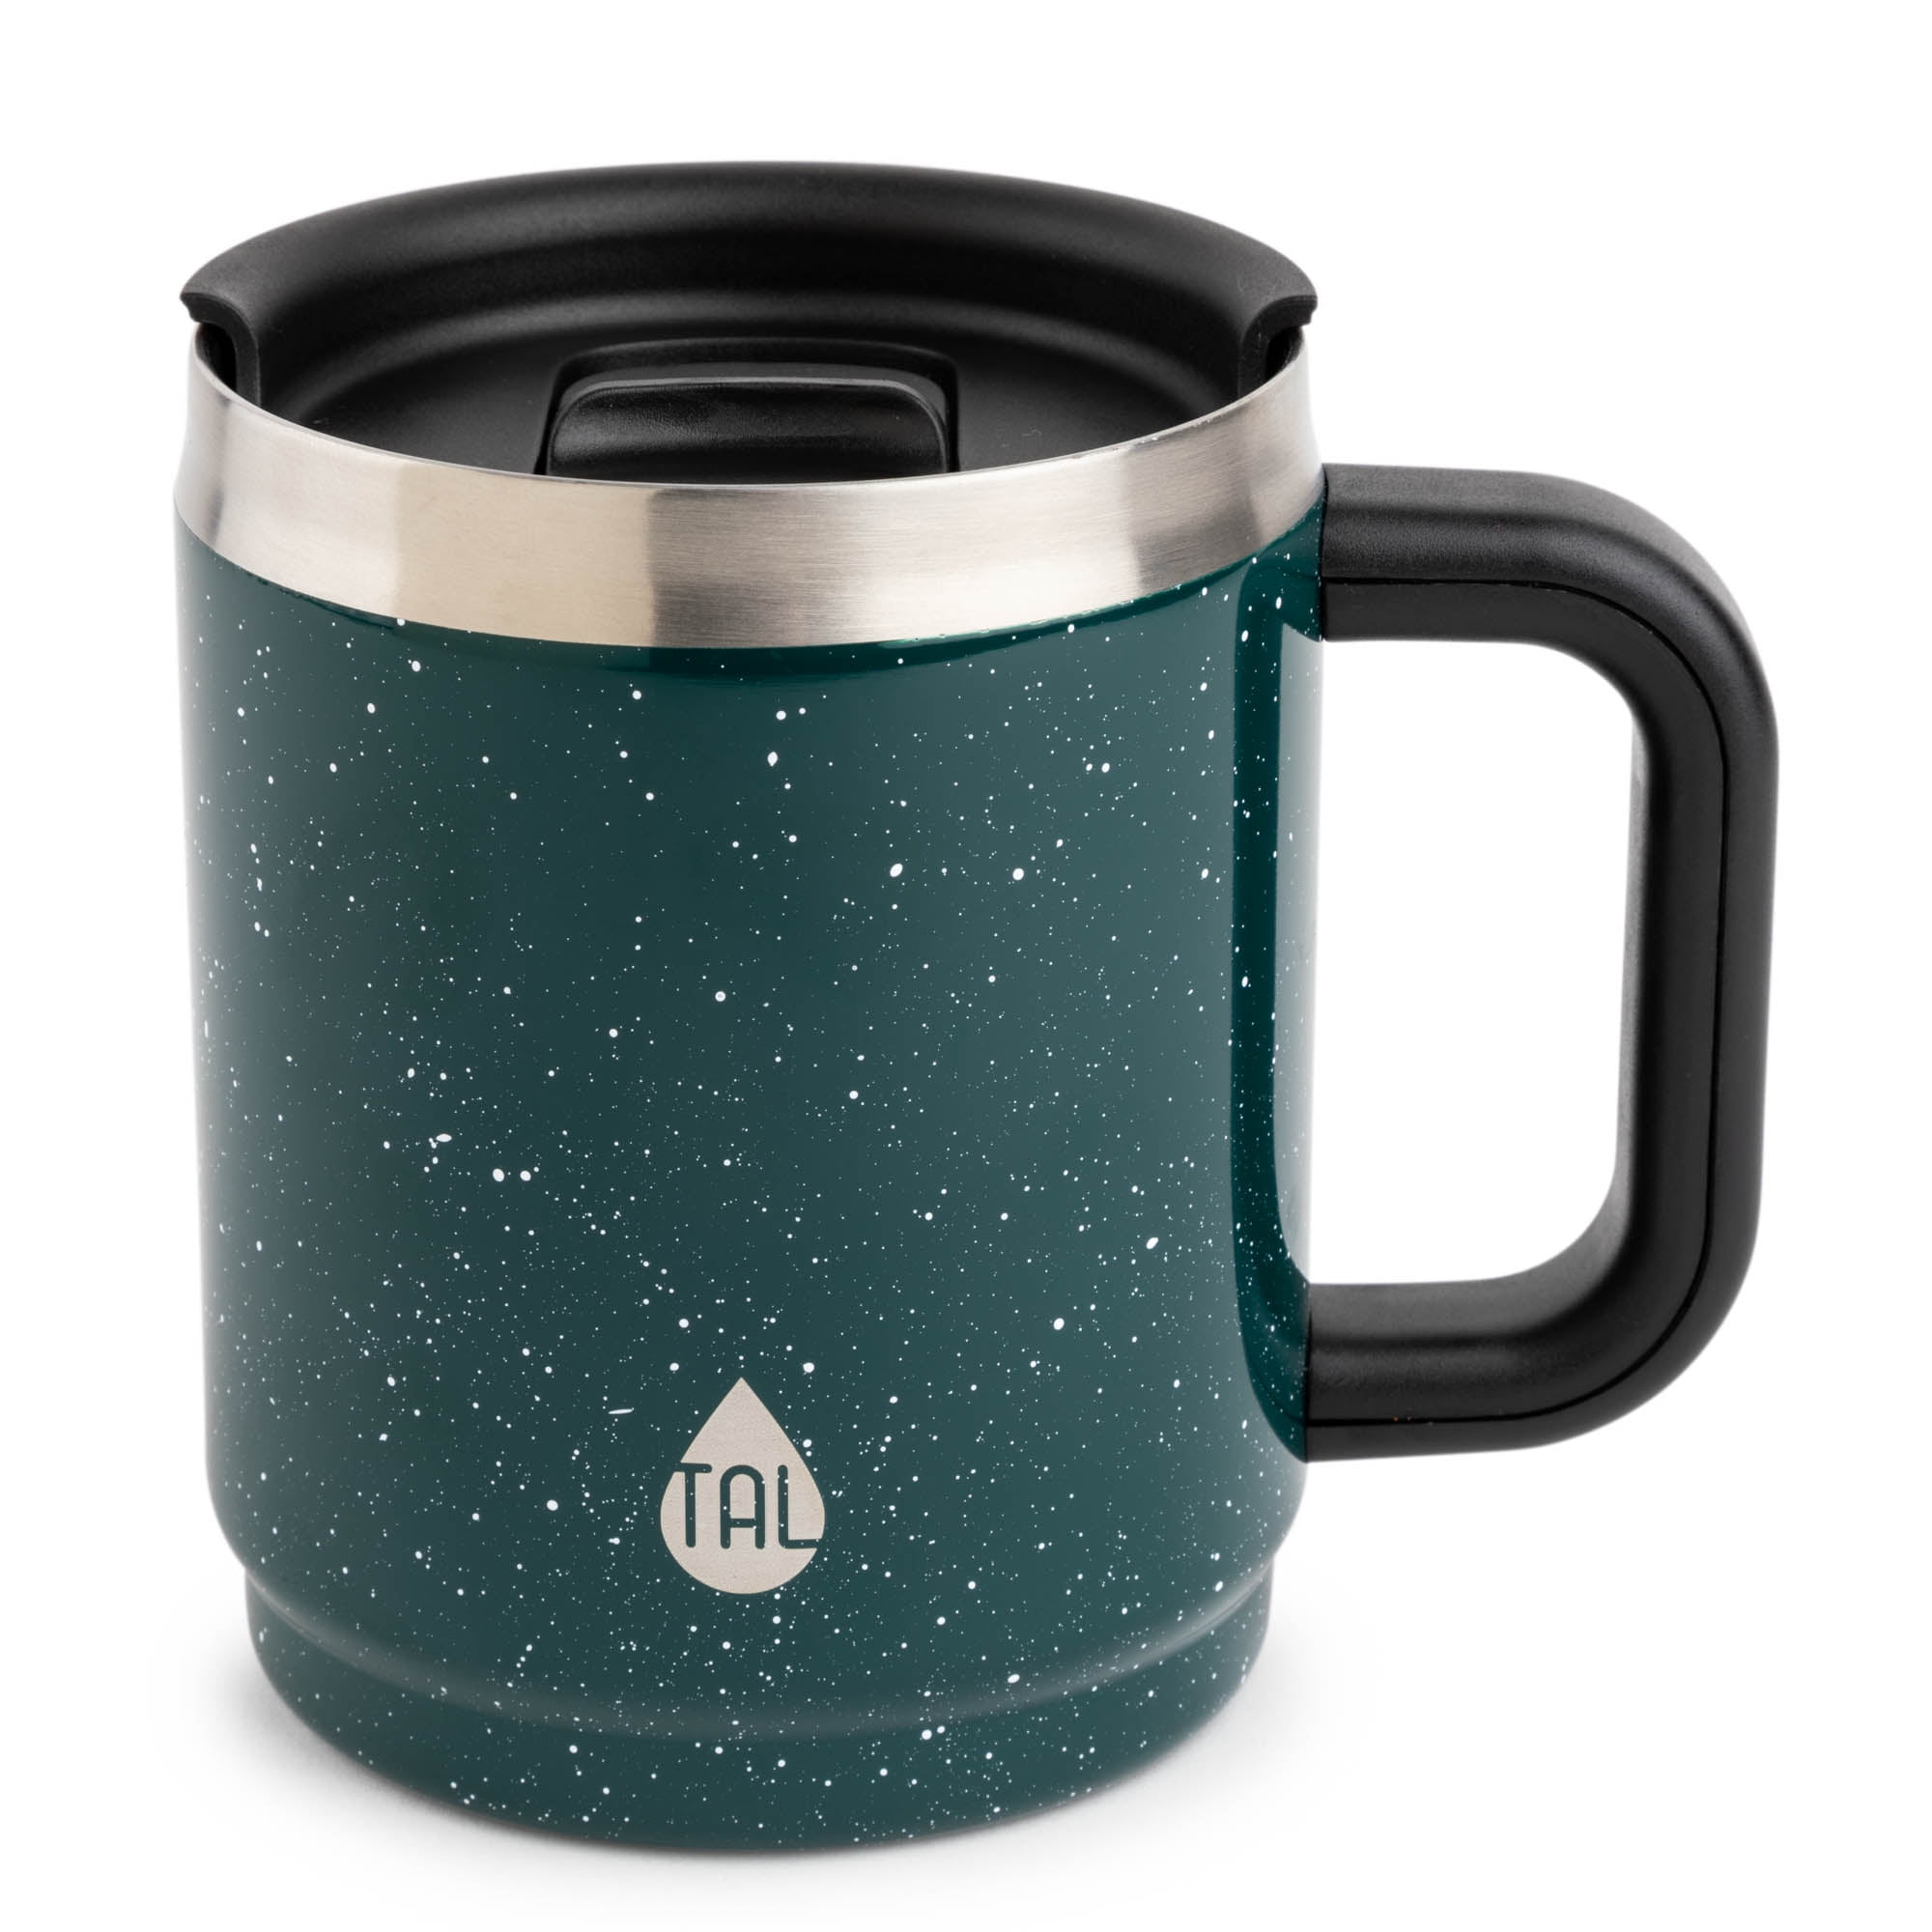 TAL Stainless Steel Boulder Coffee Mug 14oz, Black 